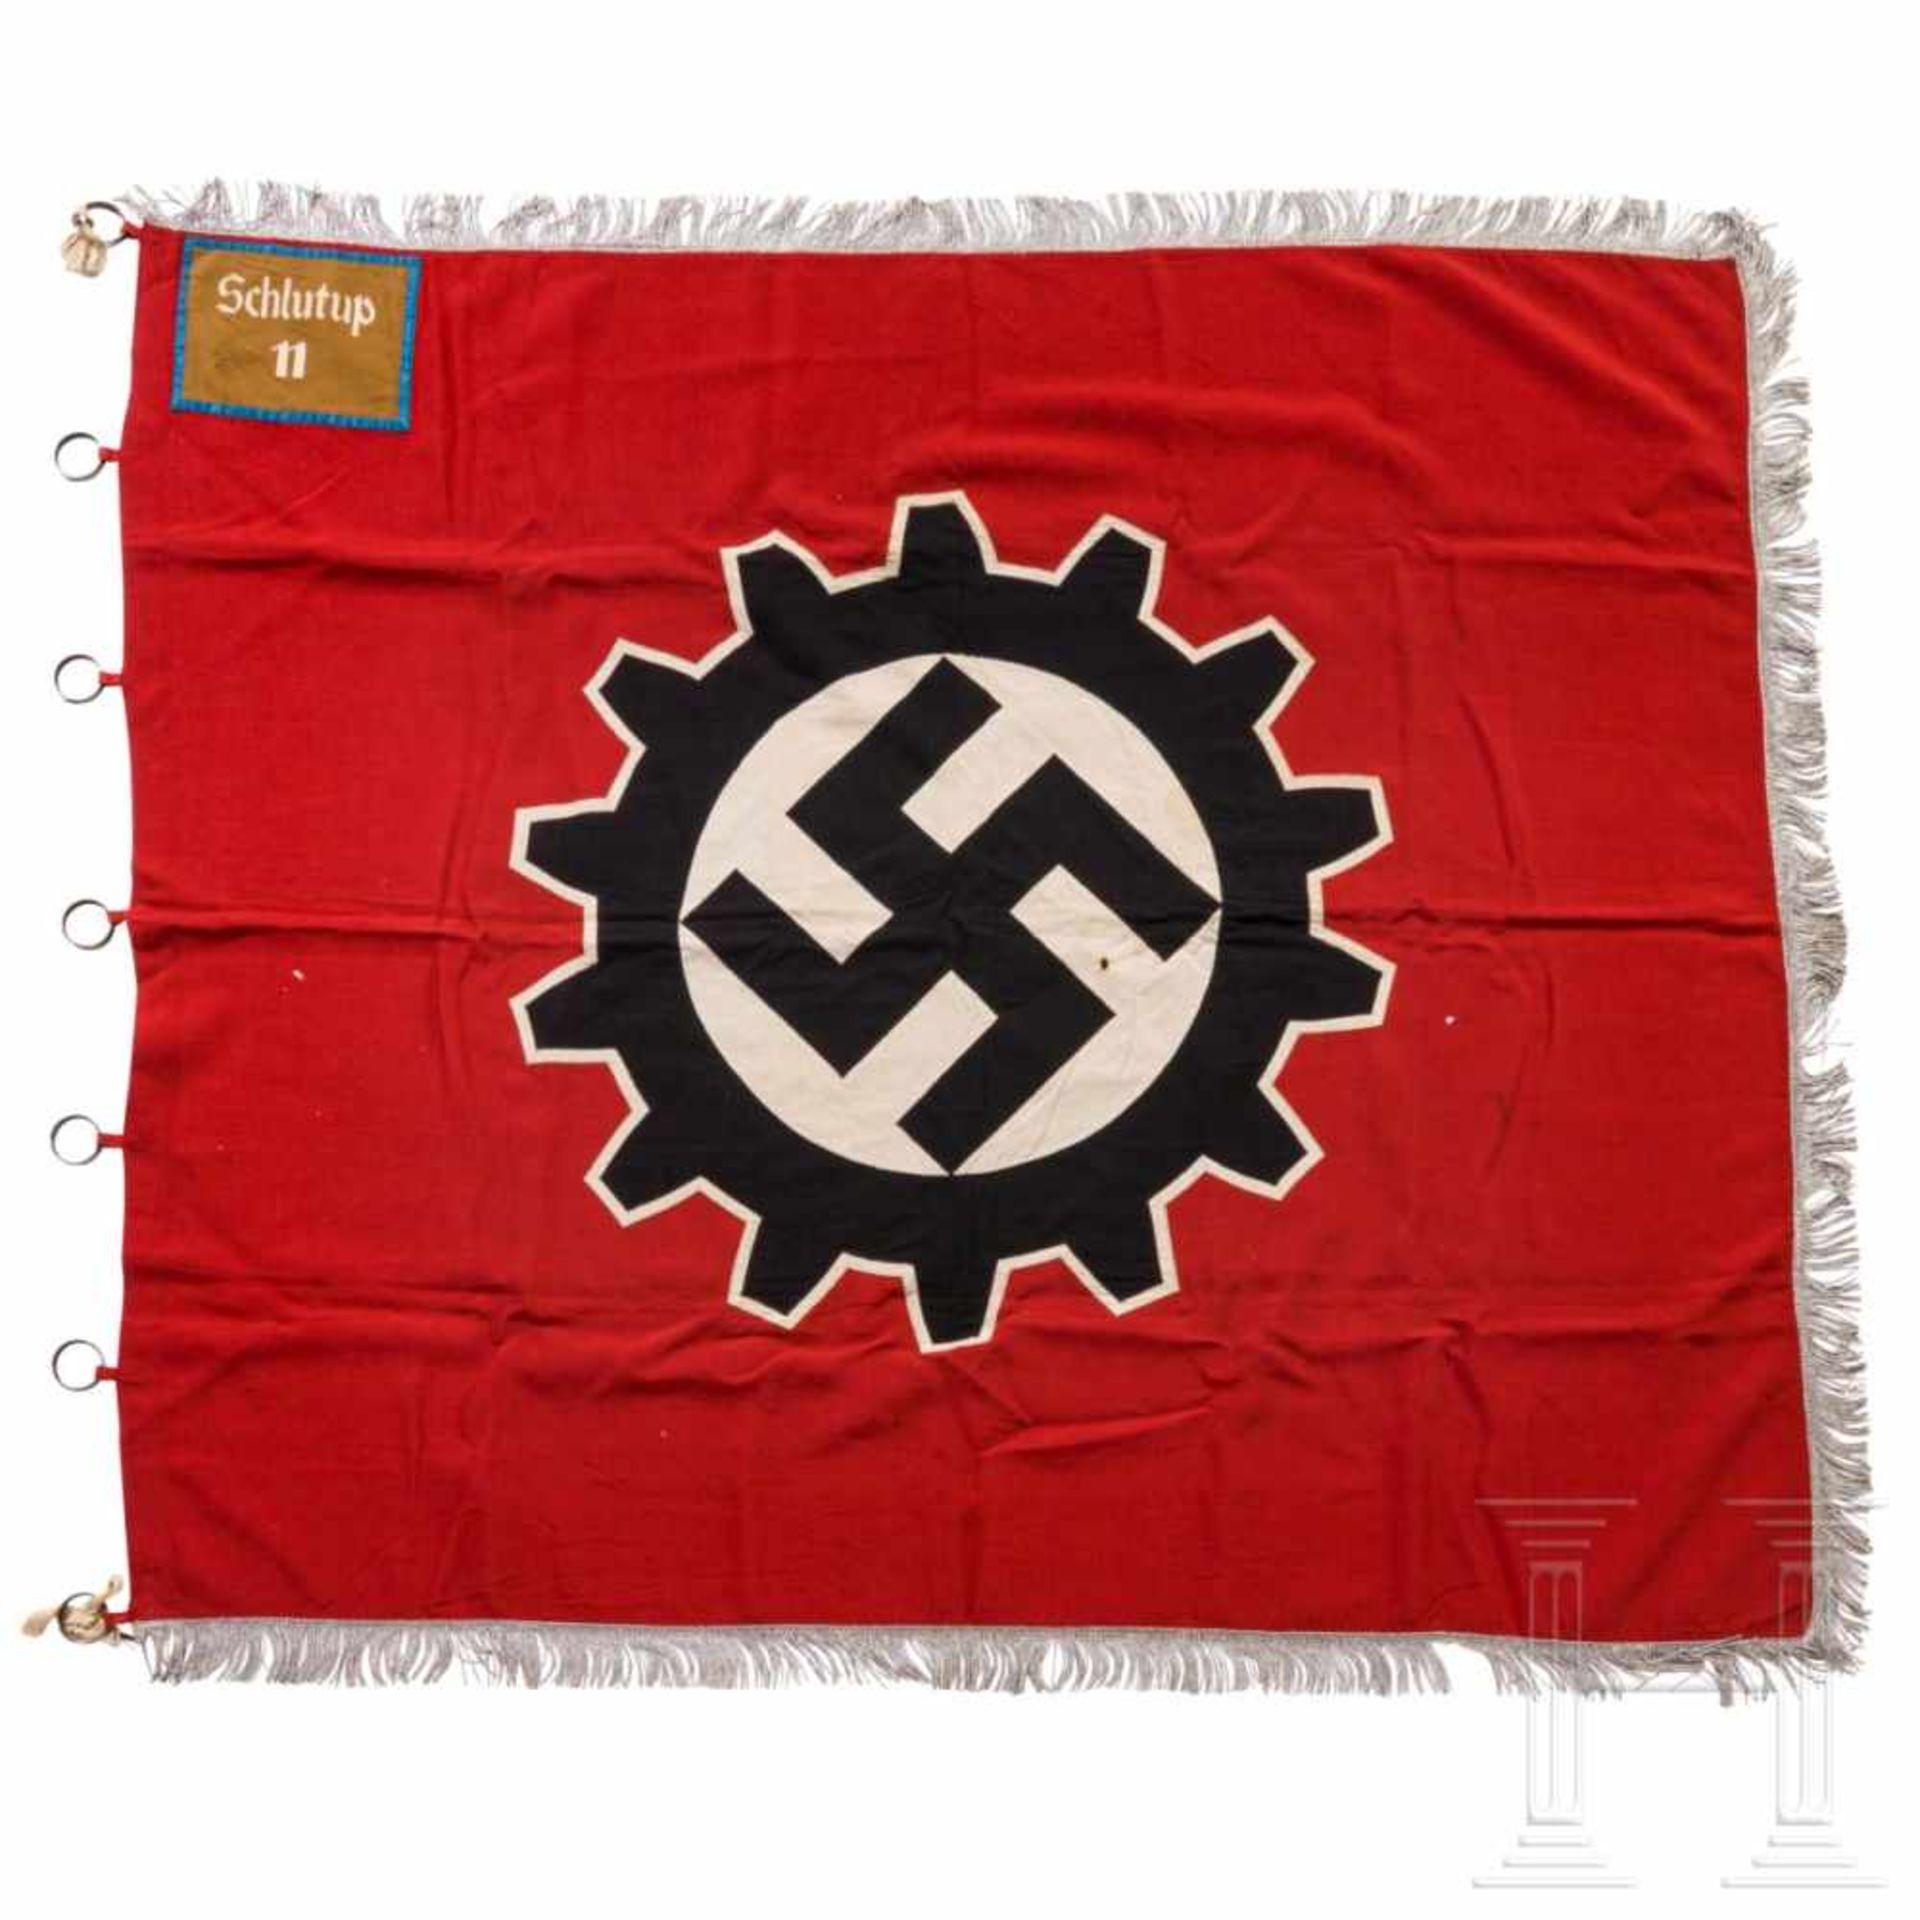 Fahne der DAF-Ortsgruppe "Schlutup 11"